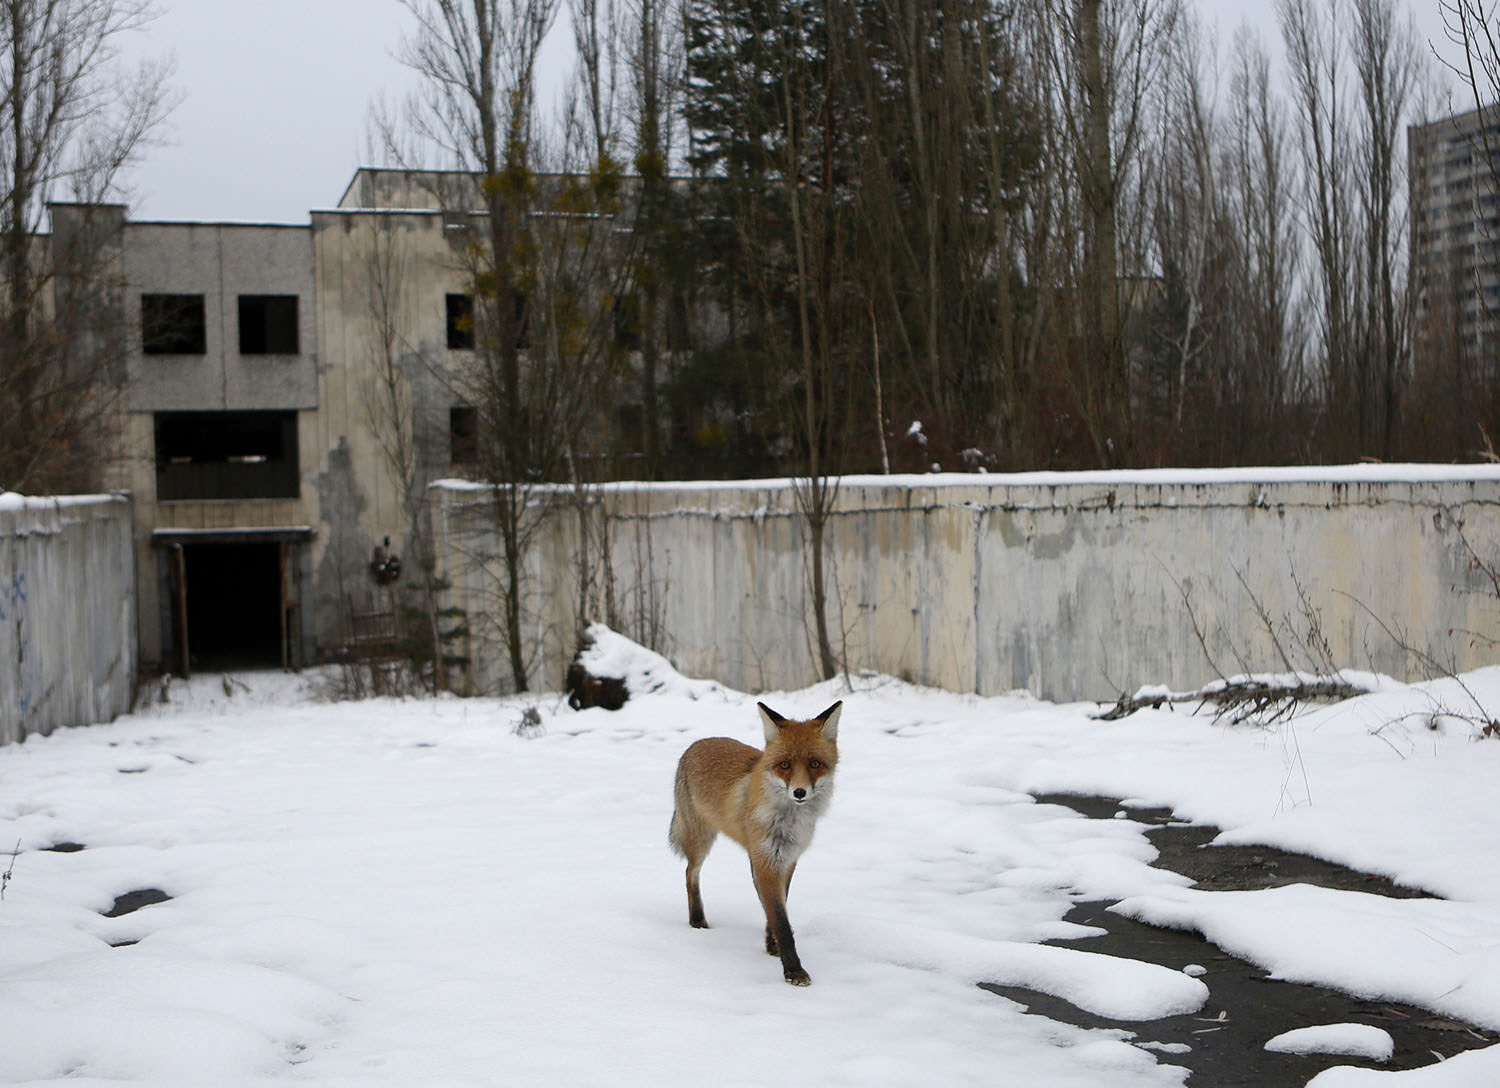 chernobyl fox roams free